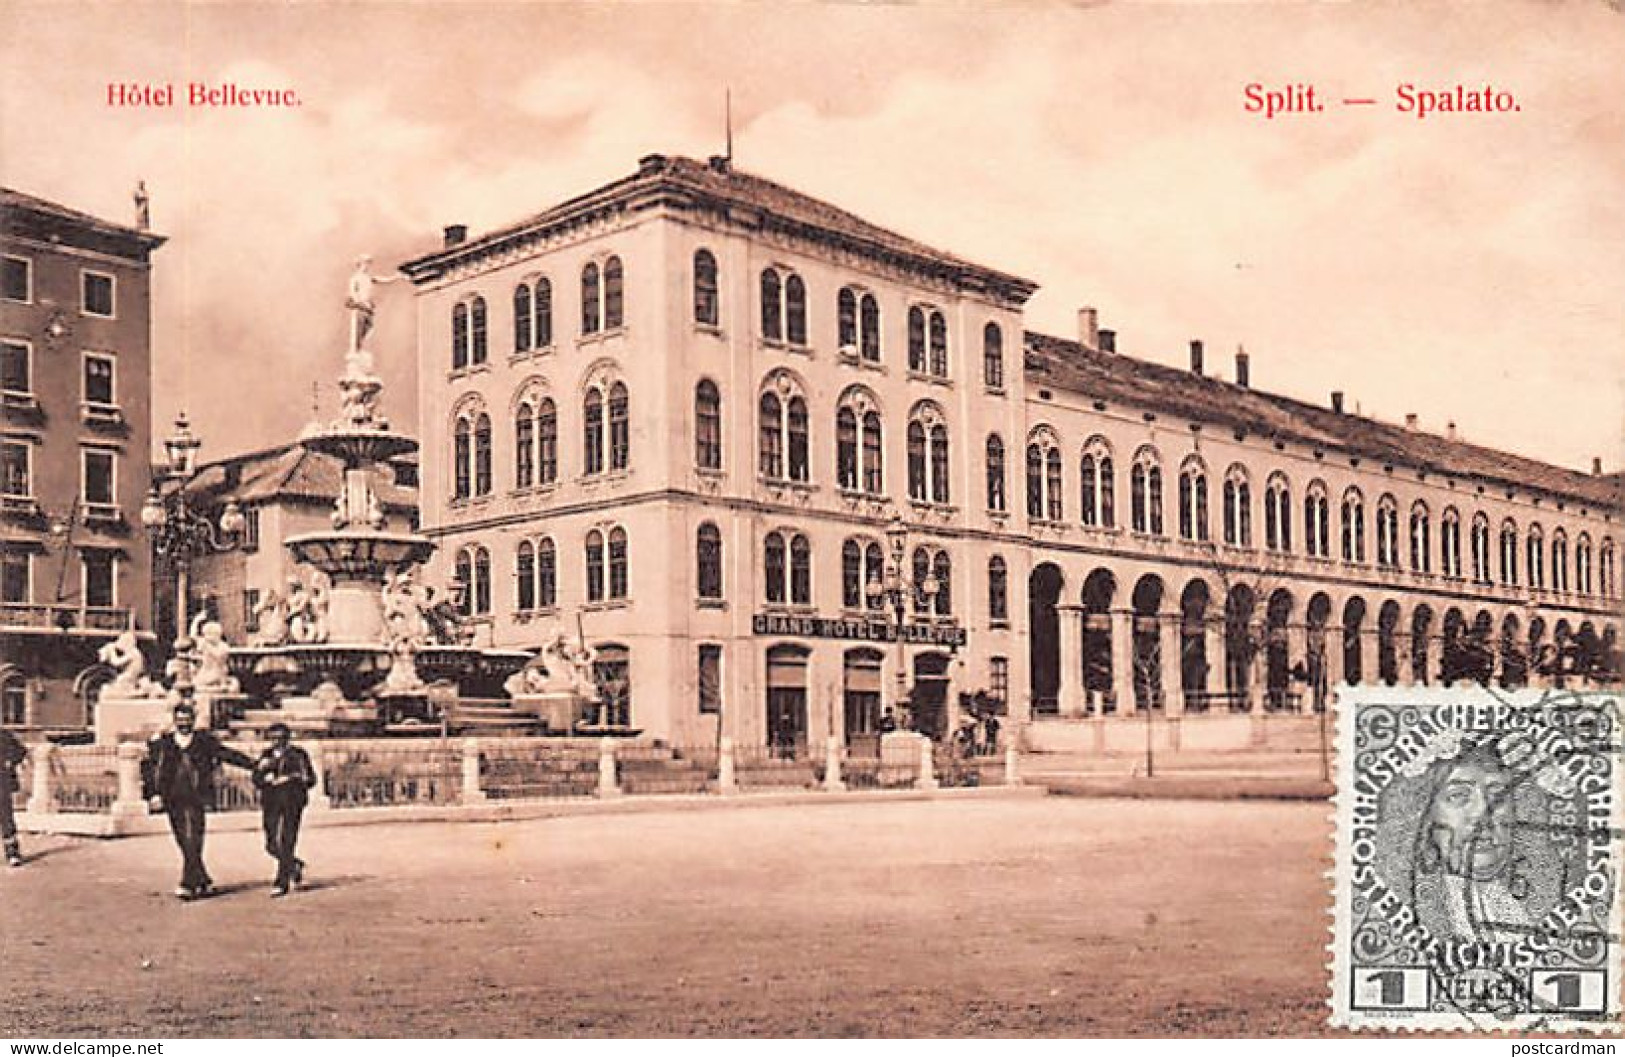 Croatia - SPLIT Spalato - Hôtel Bellevue - Publ. G. A. Milisich  - Croatia